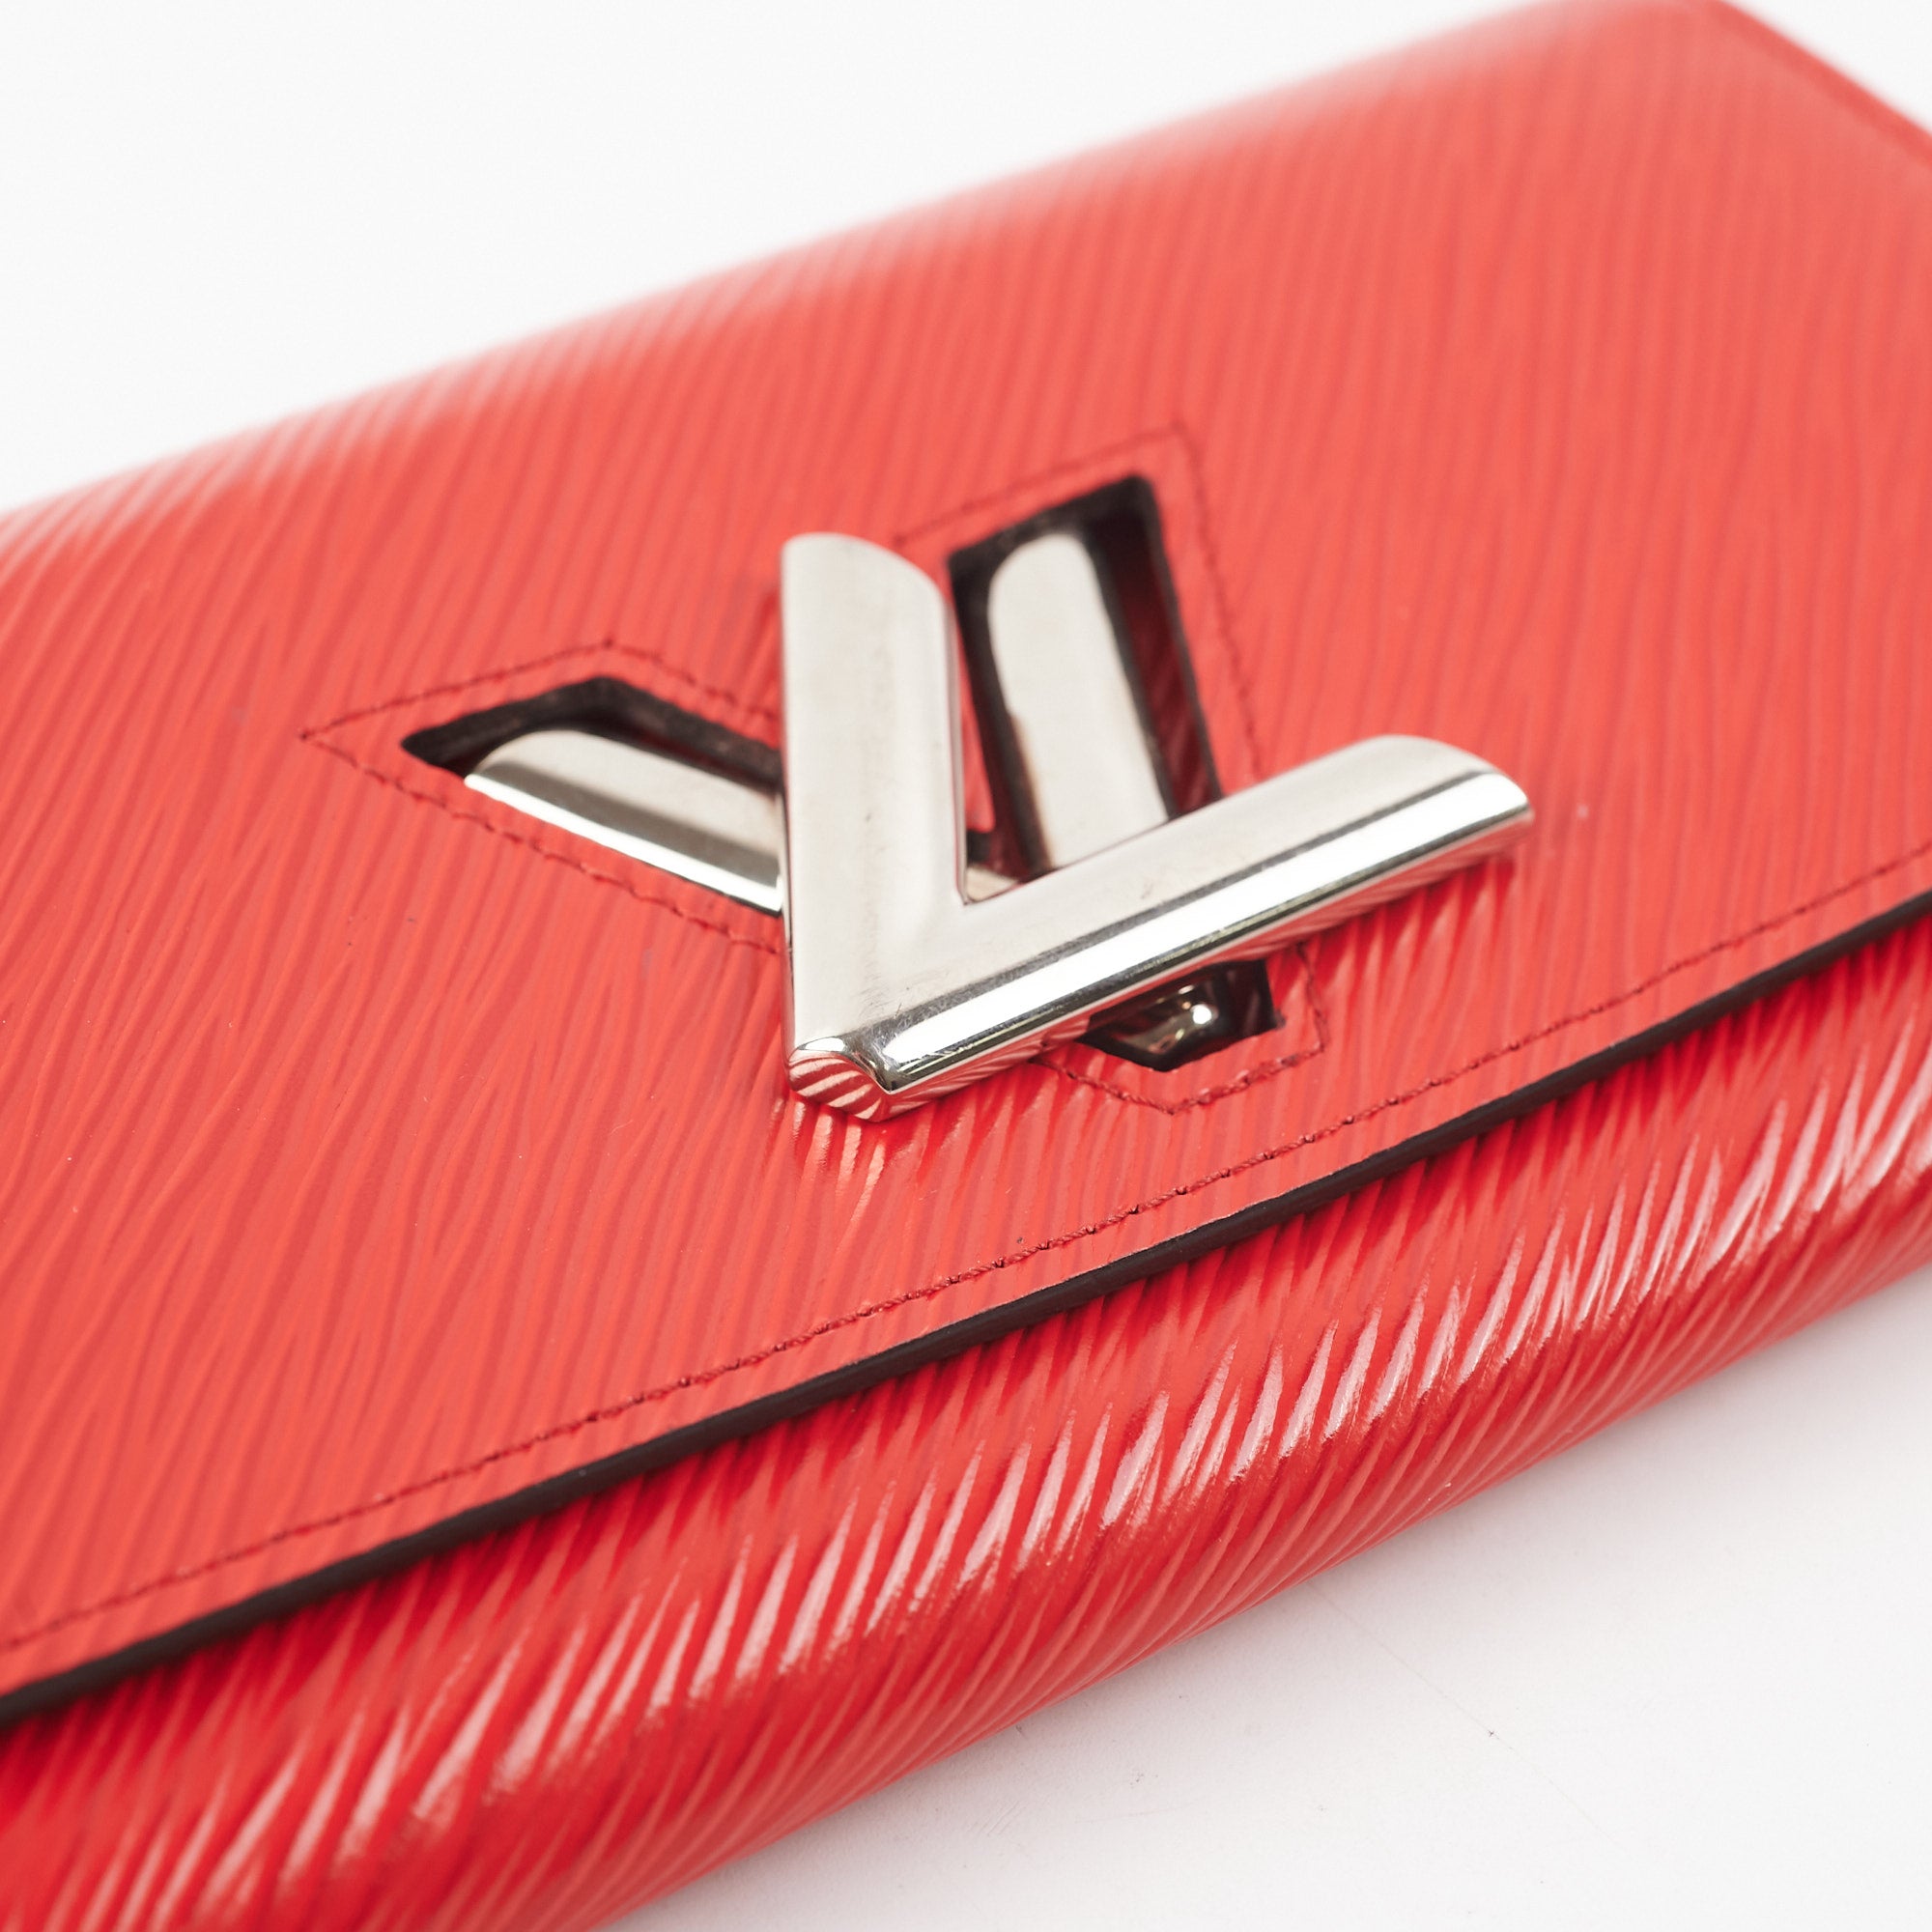 Louis Vuitton – Louis Vuitton Twist Wallet Black Epi Leather Red – Queen  Station